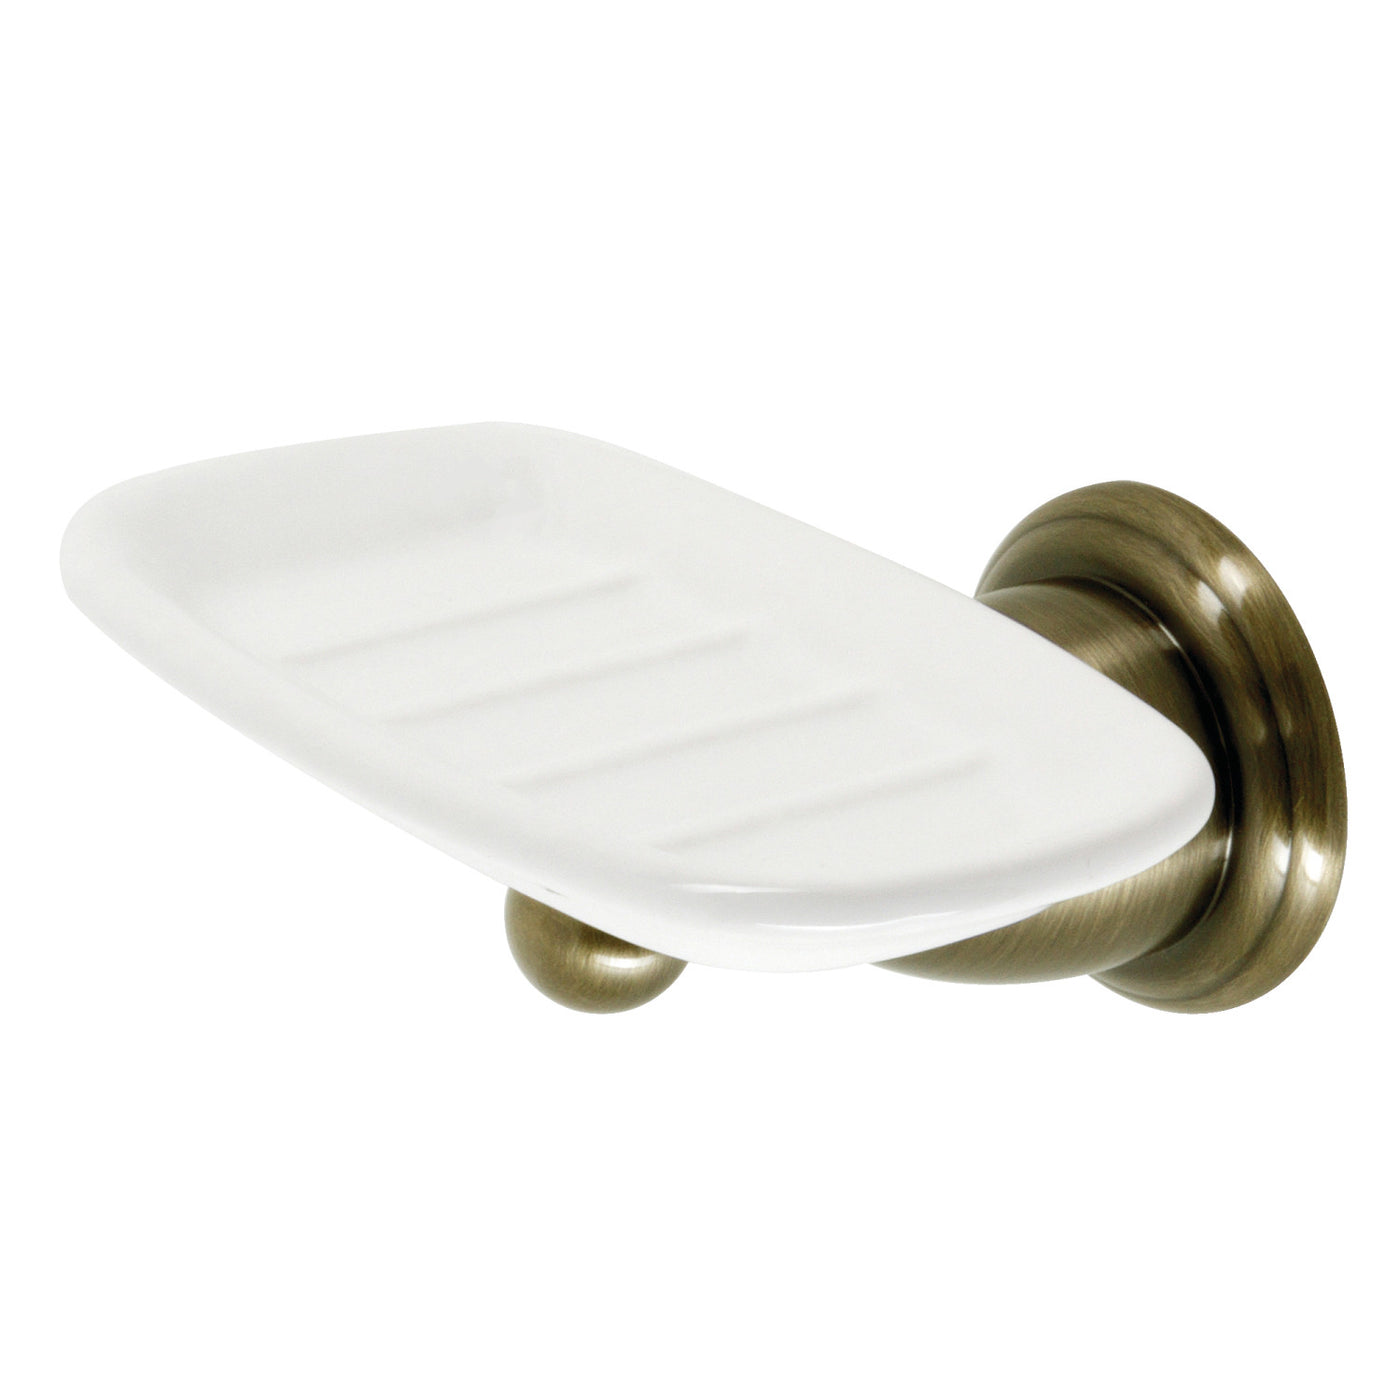 Elements of Design EBA1755AB Wall-Mount Soap Dish Holder, Antique Brass